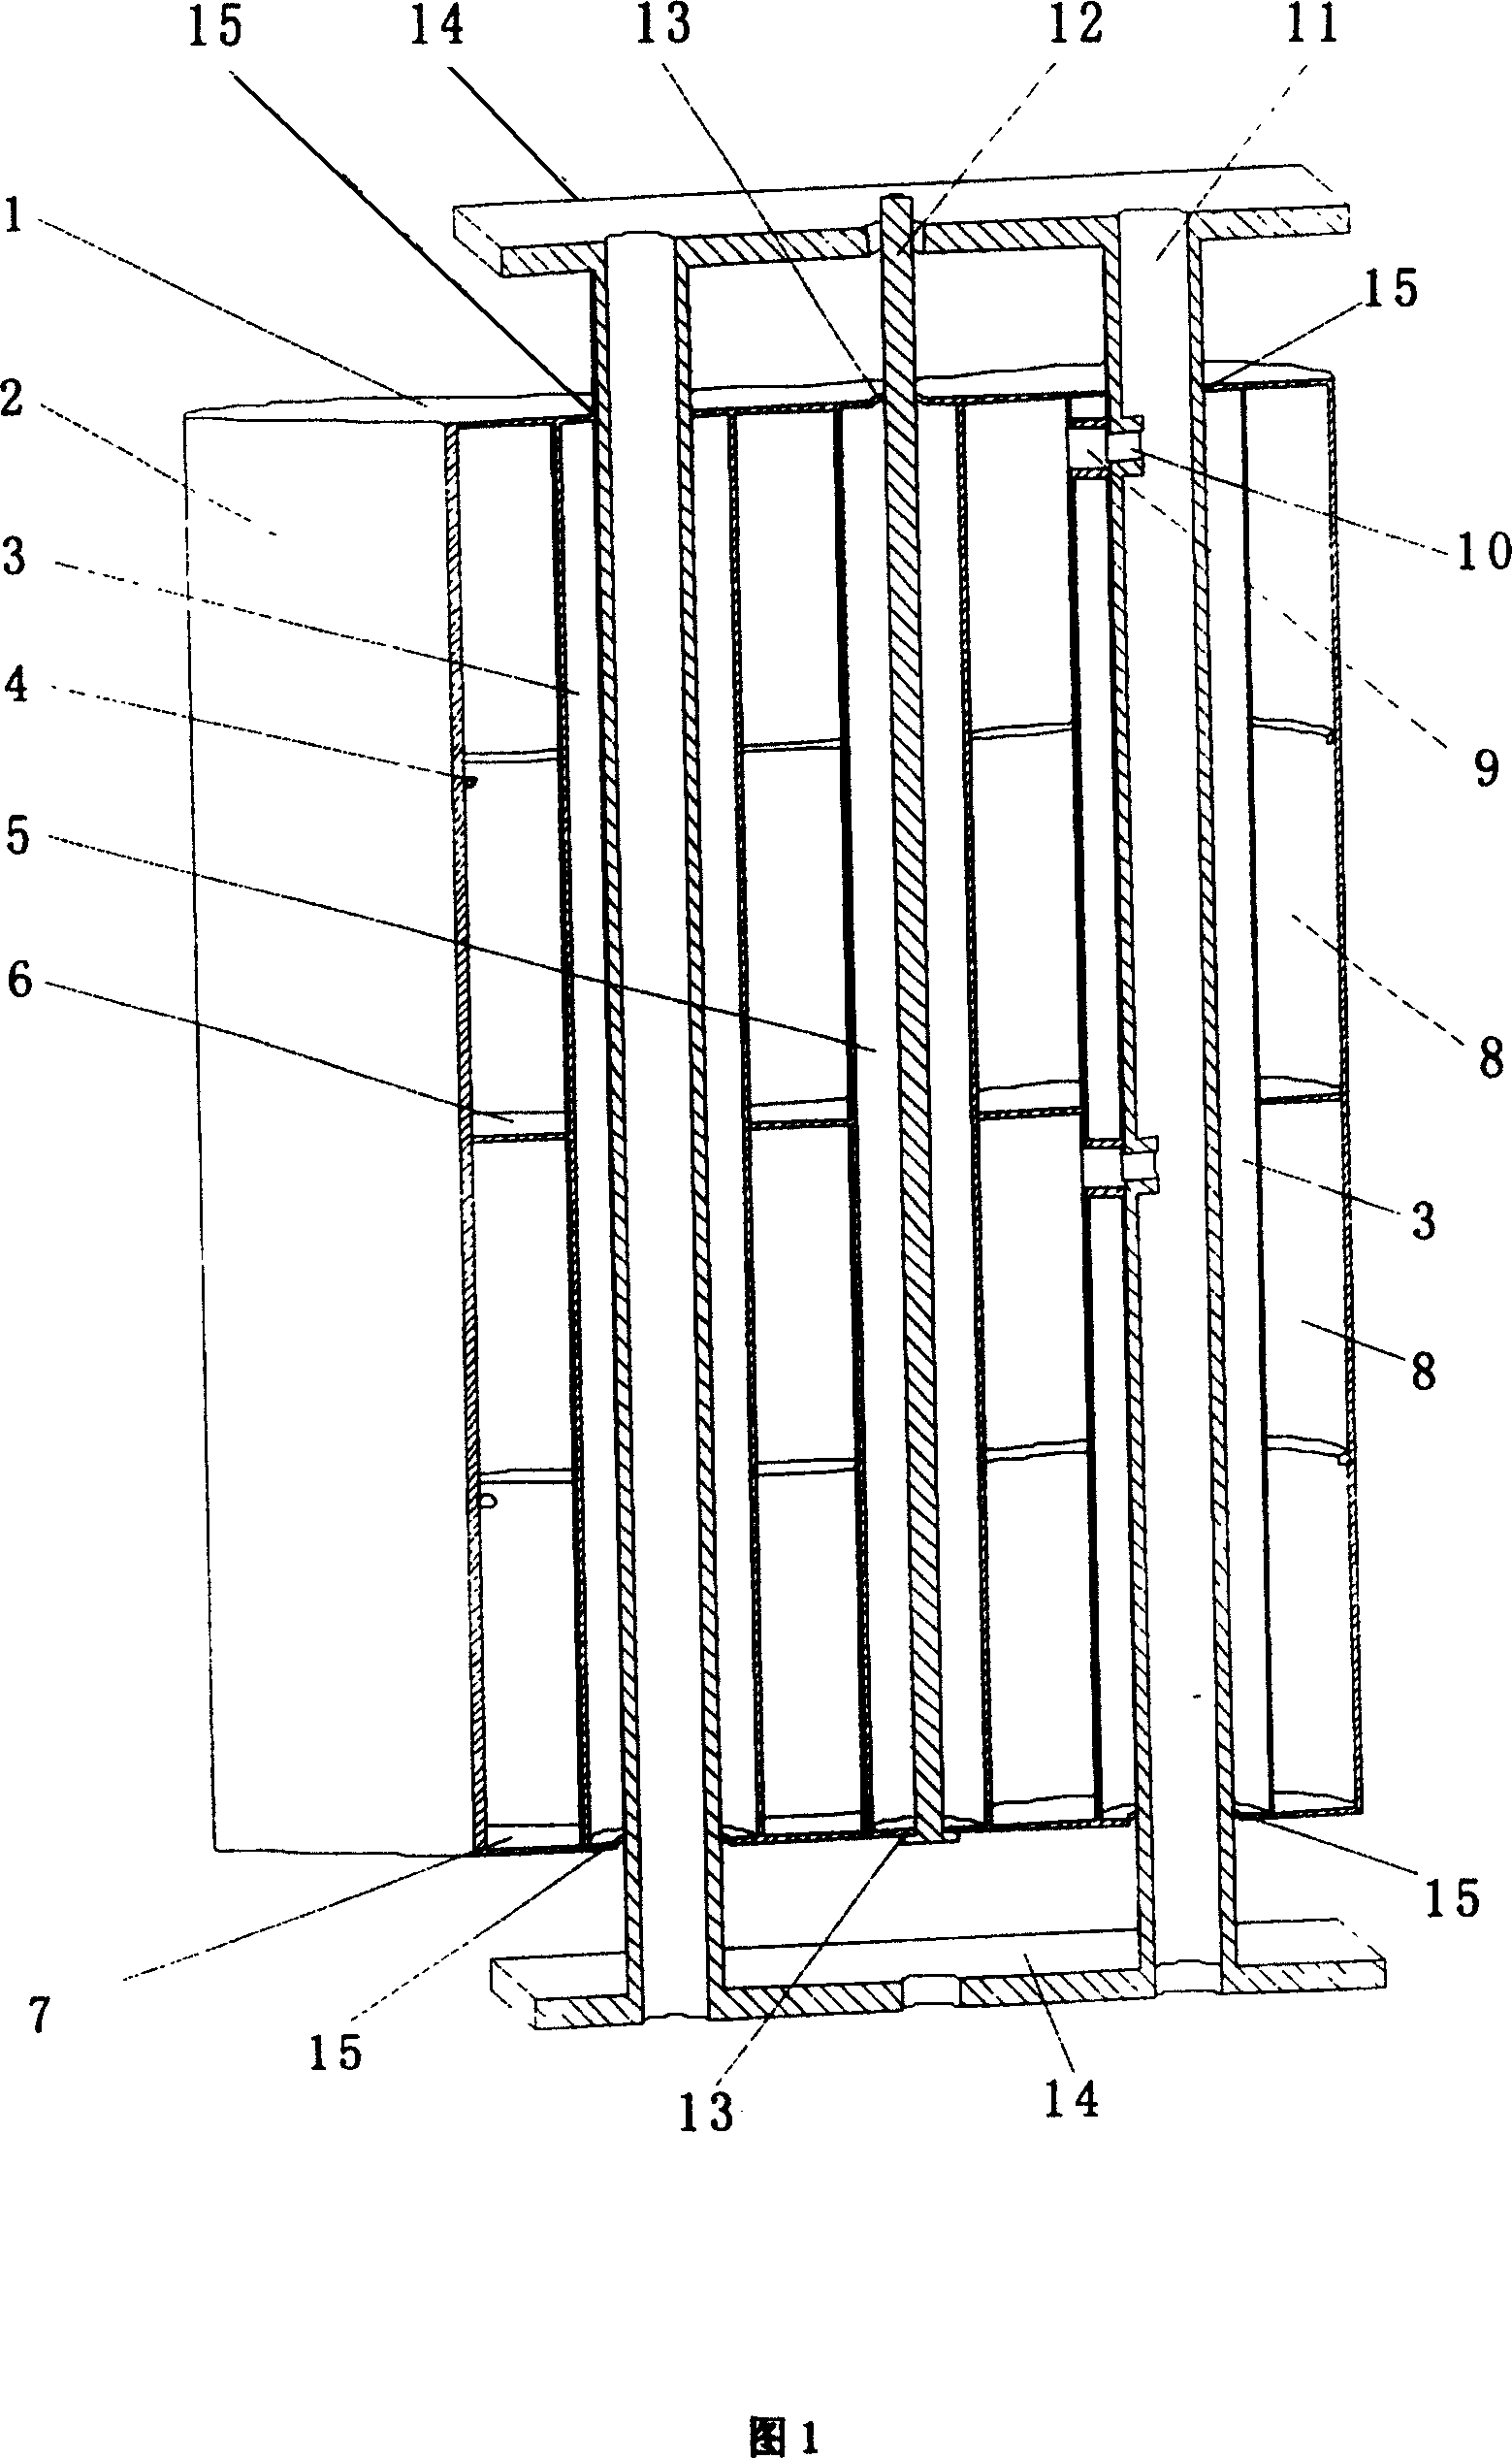 Wing panels of aeration blower fan